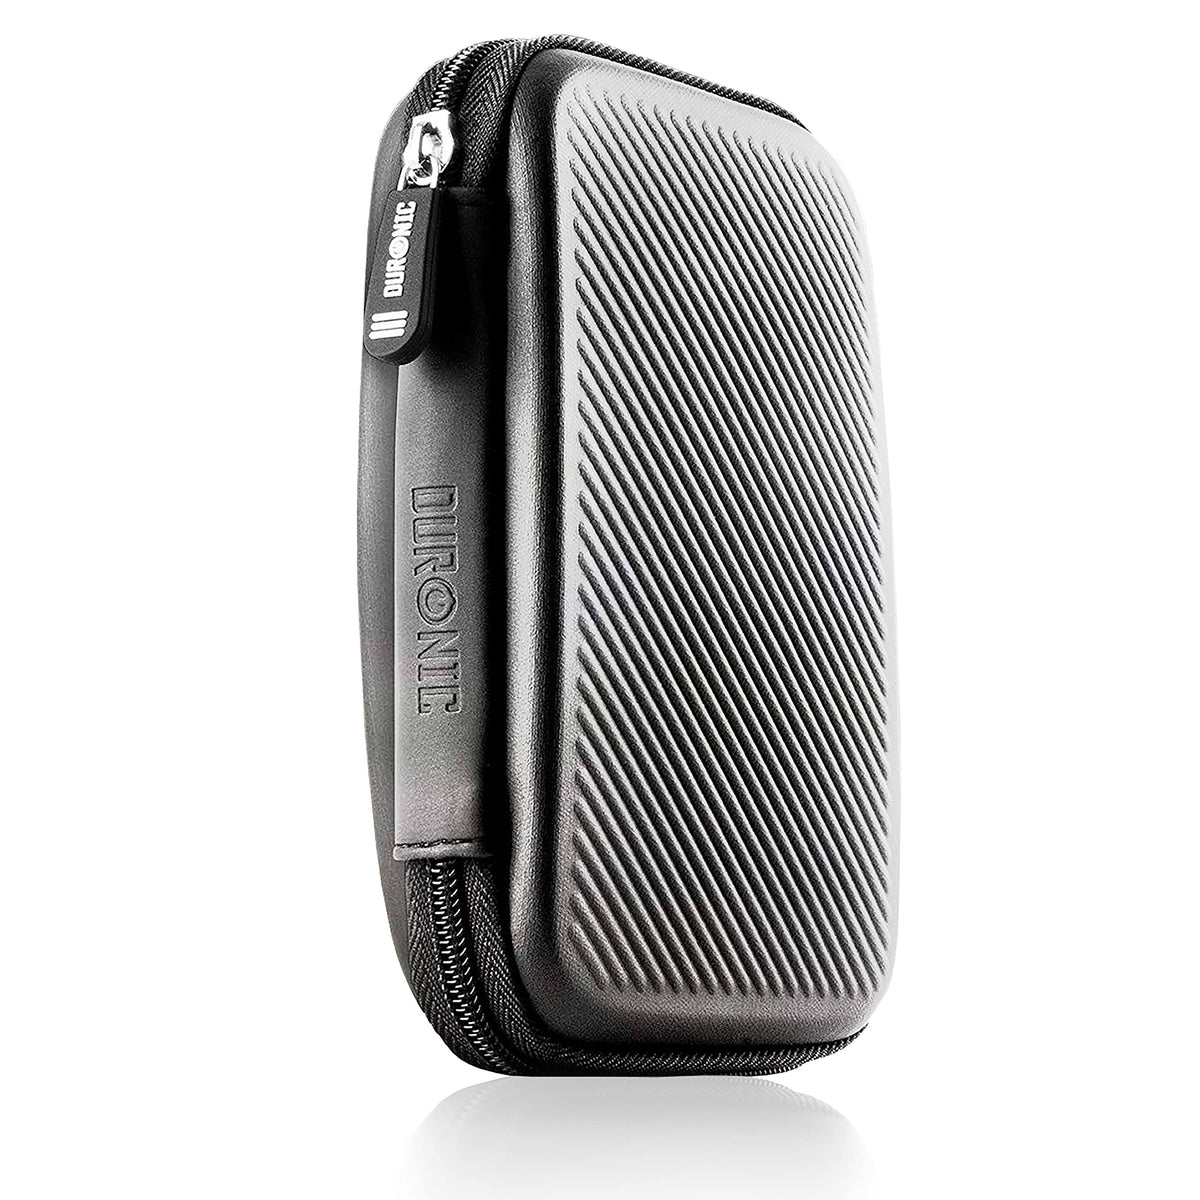 Duronic Hard Drive Case HDC2 /GY | GREY | Portable EVA Storage